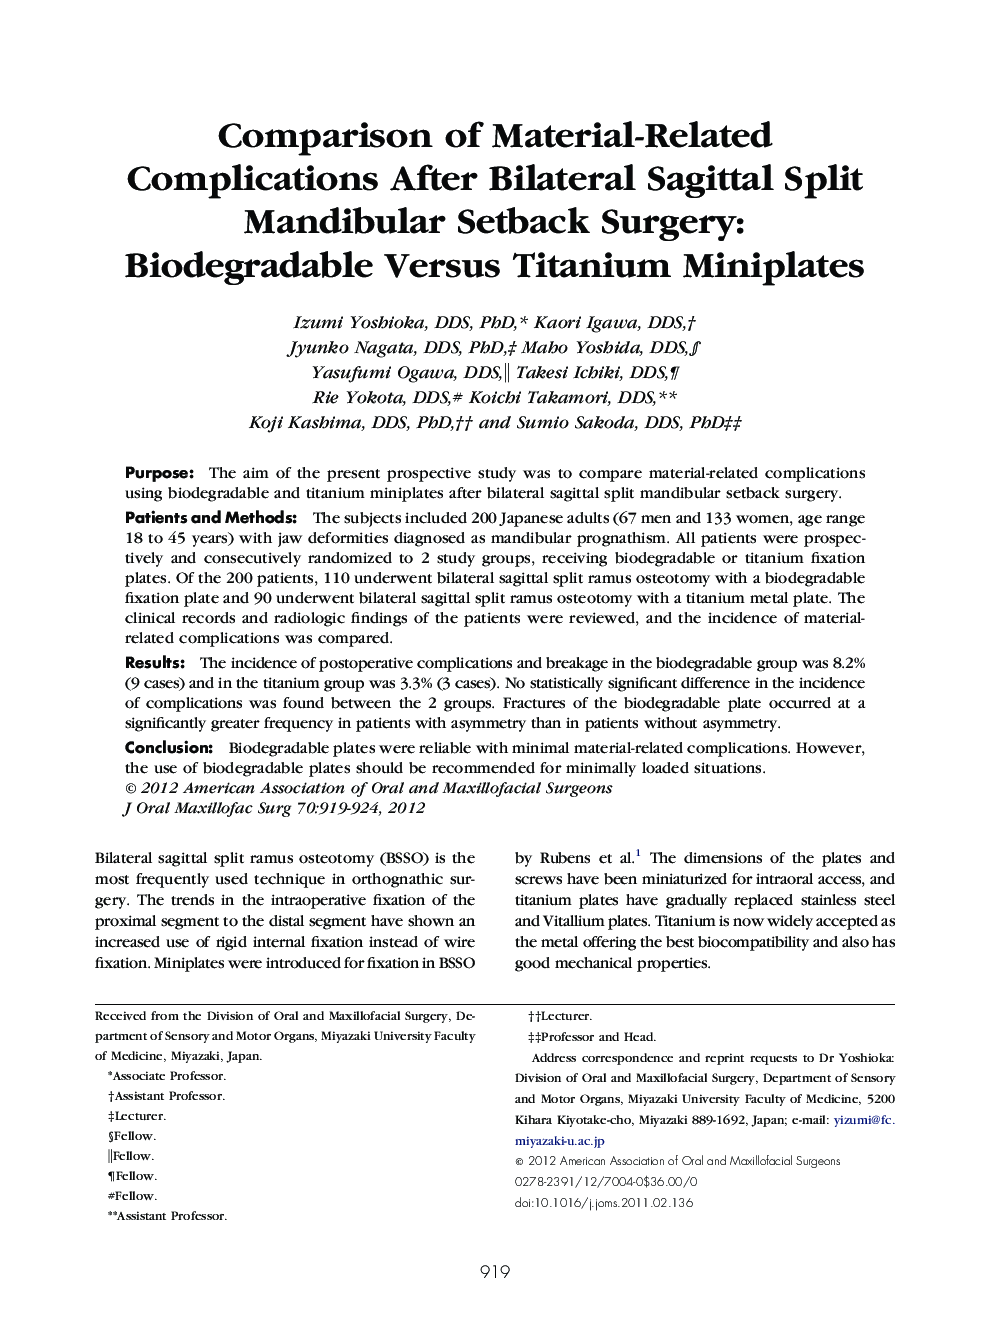 Comparison of Material-Related Complications After Bilateral Sagittal Split Mandibular Setback Surgery: Biodegradable Versus Titanium Miniplates